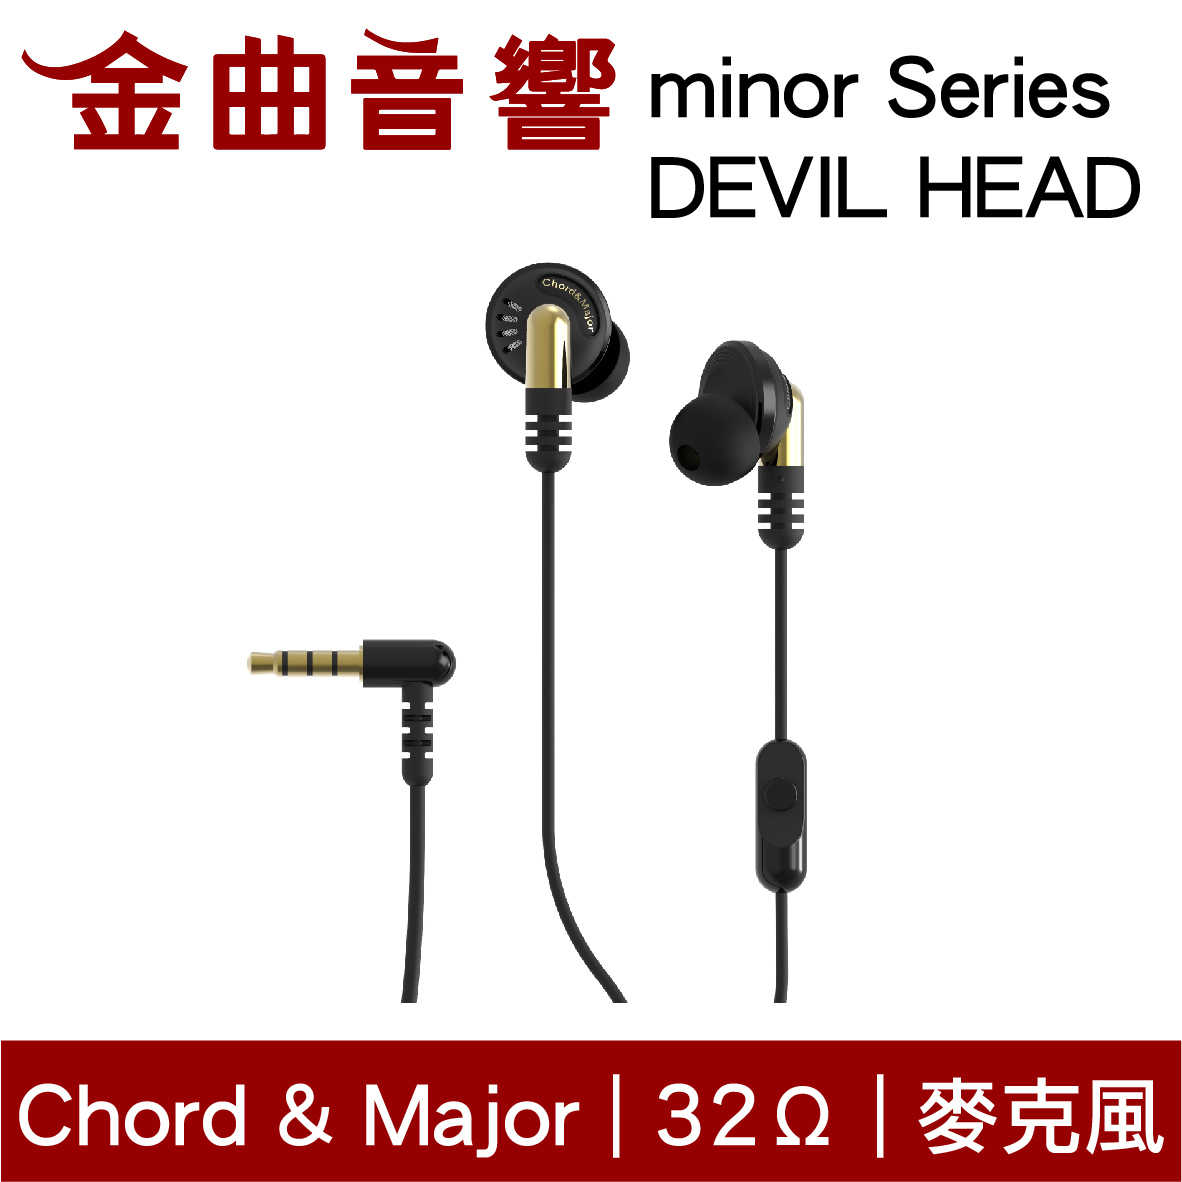 Chord & Major 小調性耳機 minor series 惡魔頭 通話 耳道式 耳機 | 金曲音響